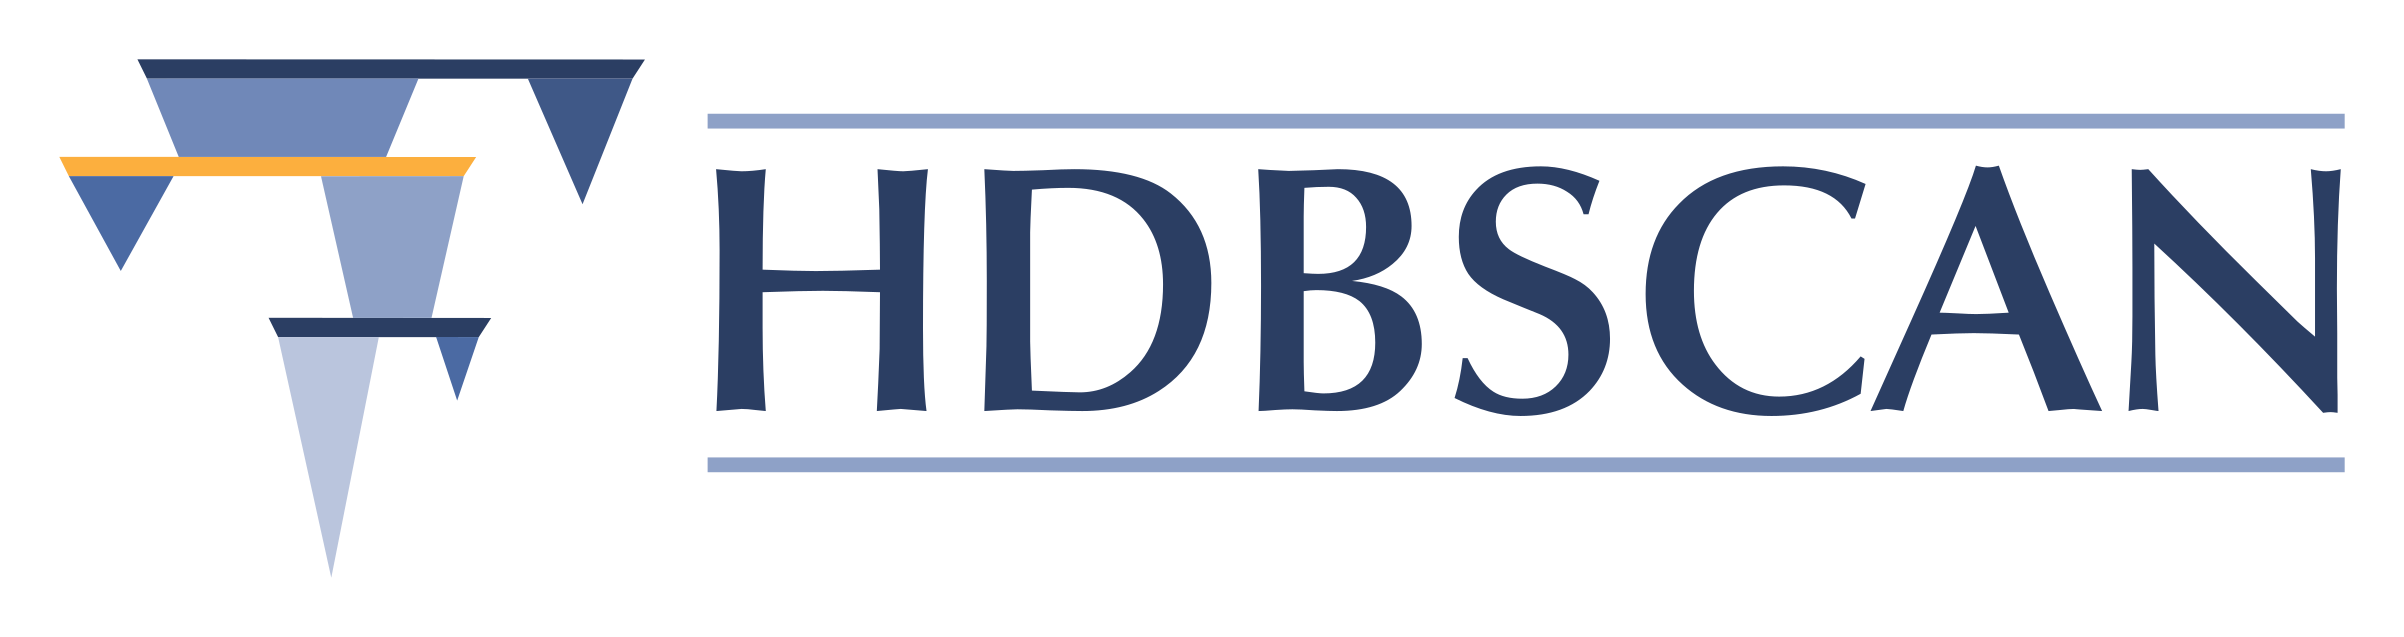 HDBSCAN logo